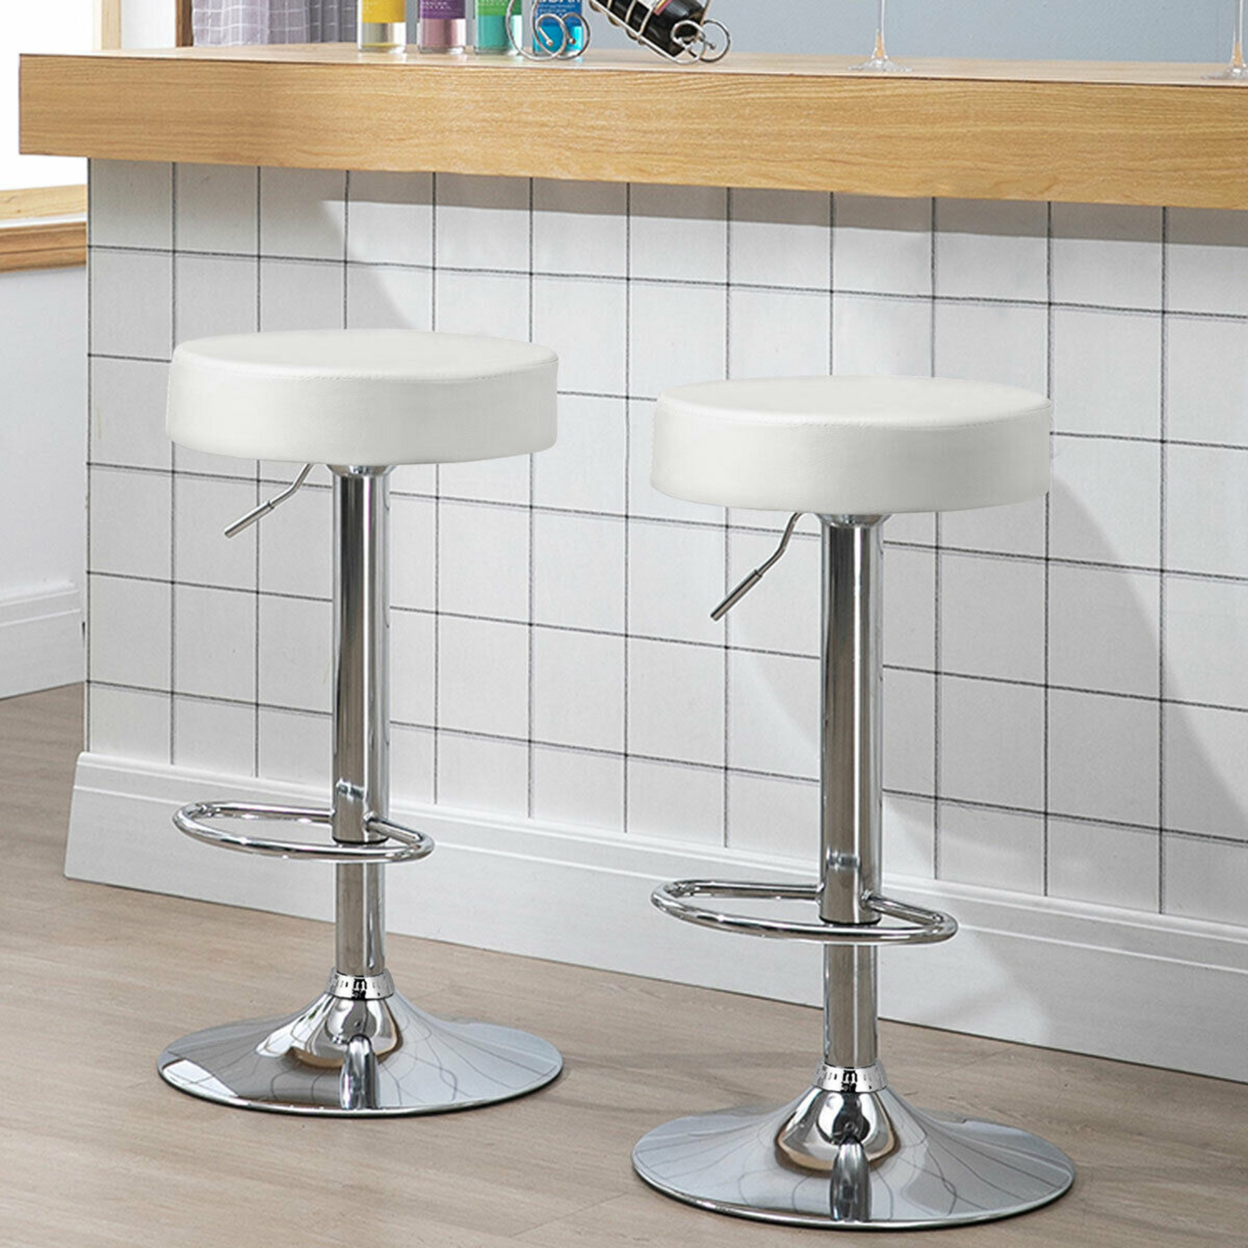 2PCS Adjustable Swivel Bar Stool PU Leather Kitchen Counter Bar Chairs White